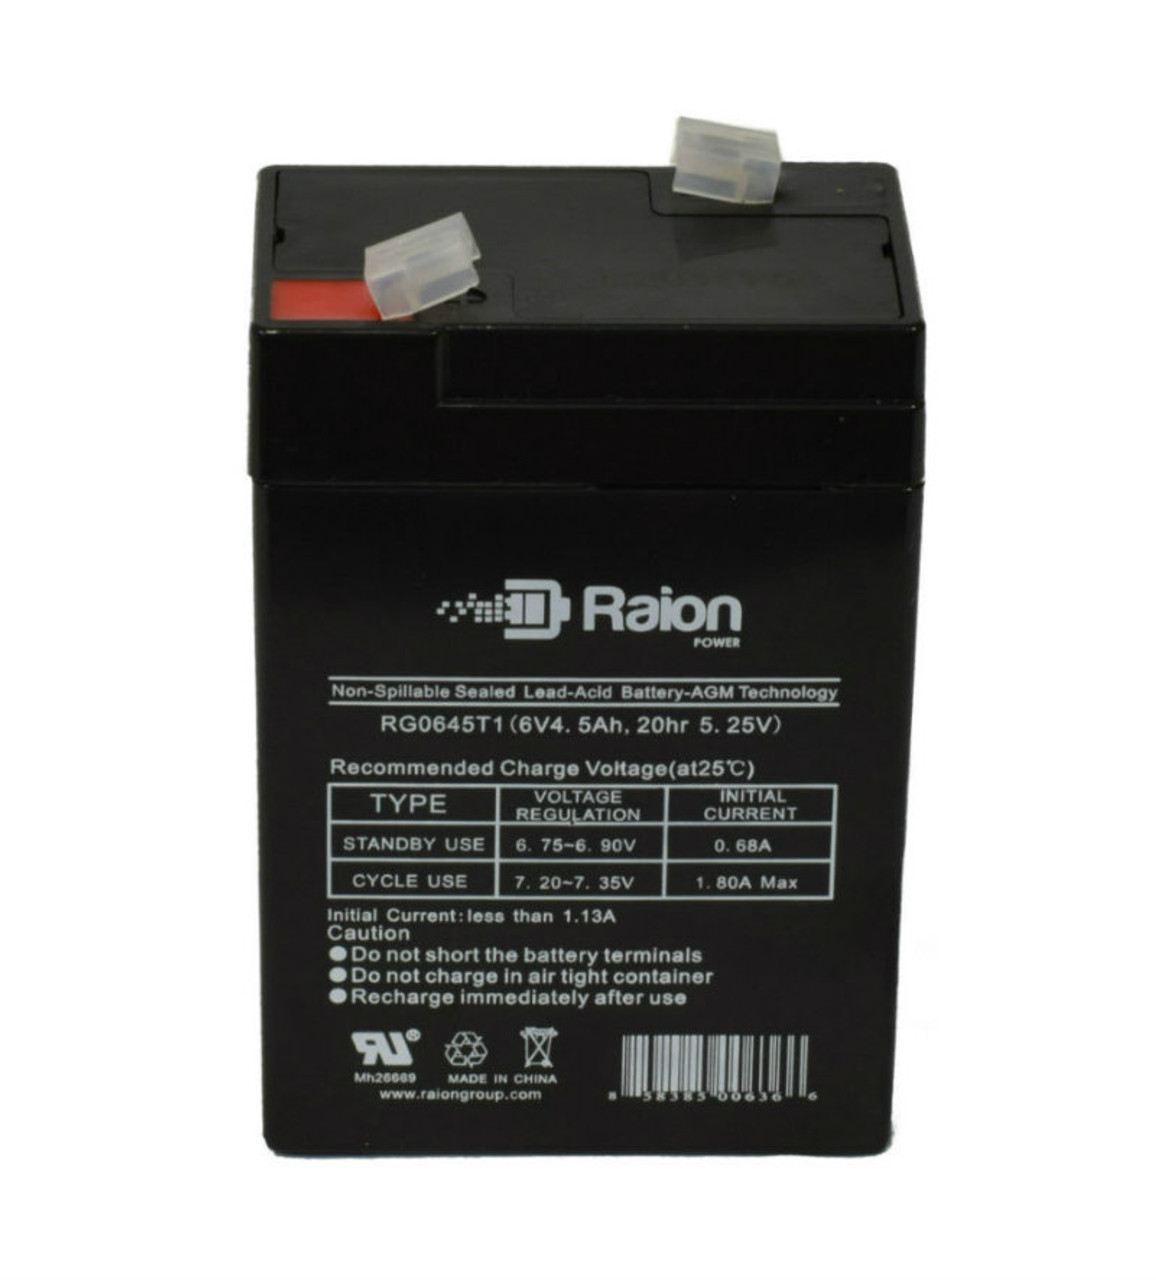 Raion Power RG0645T1 Replacement Battery Cartridge for Vasworld Power GB6-6